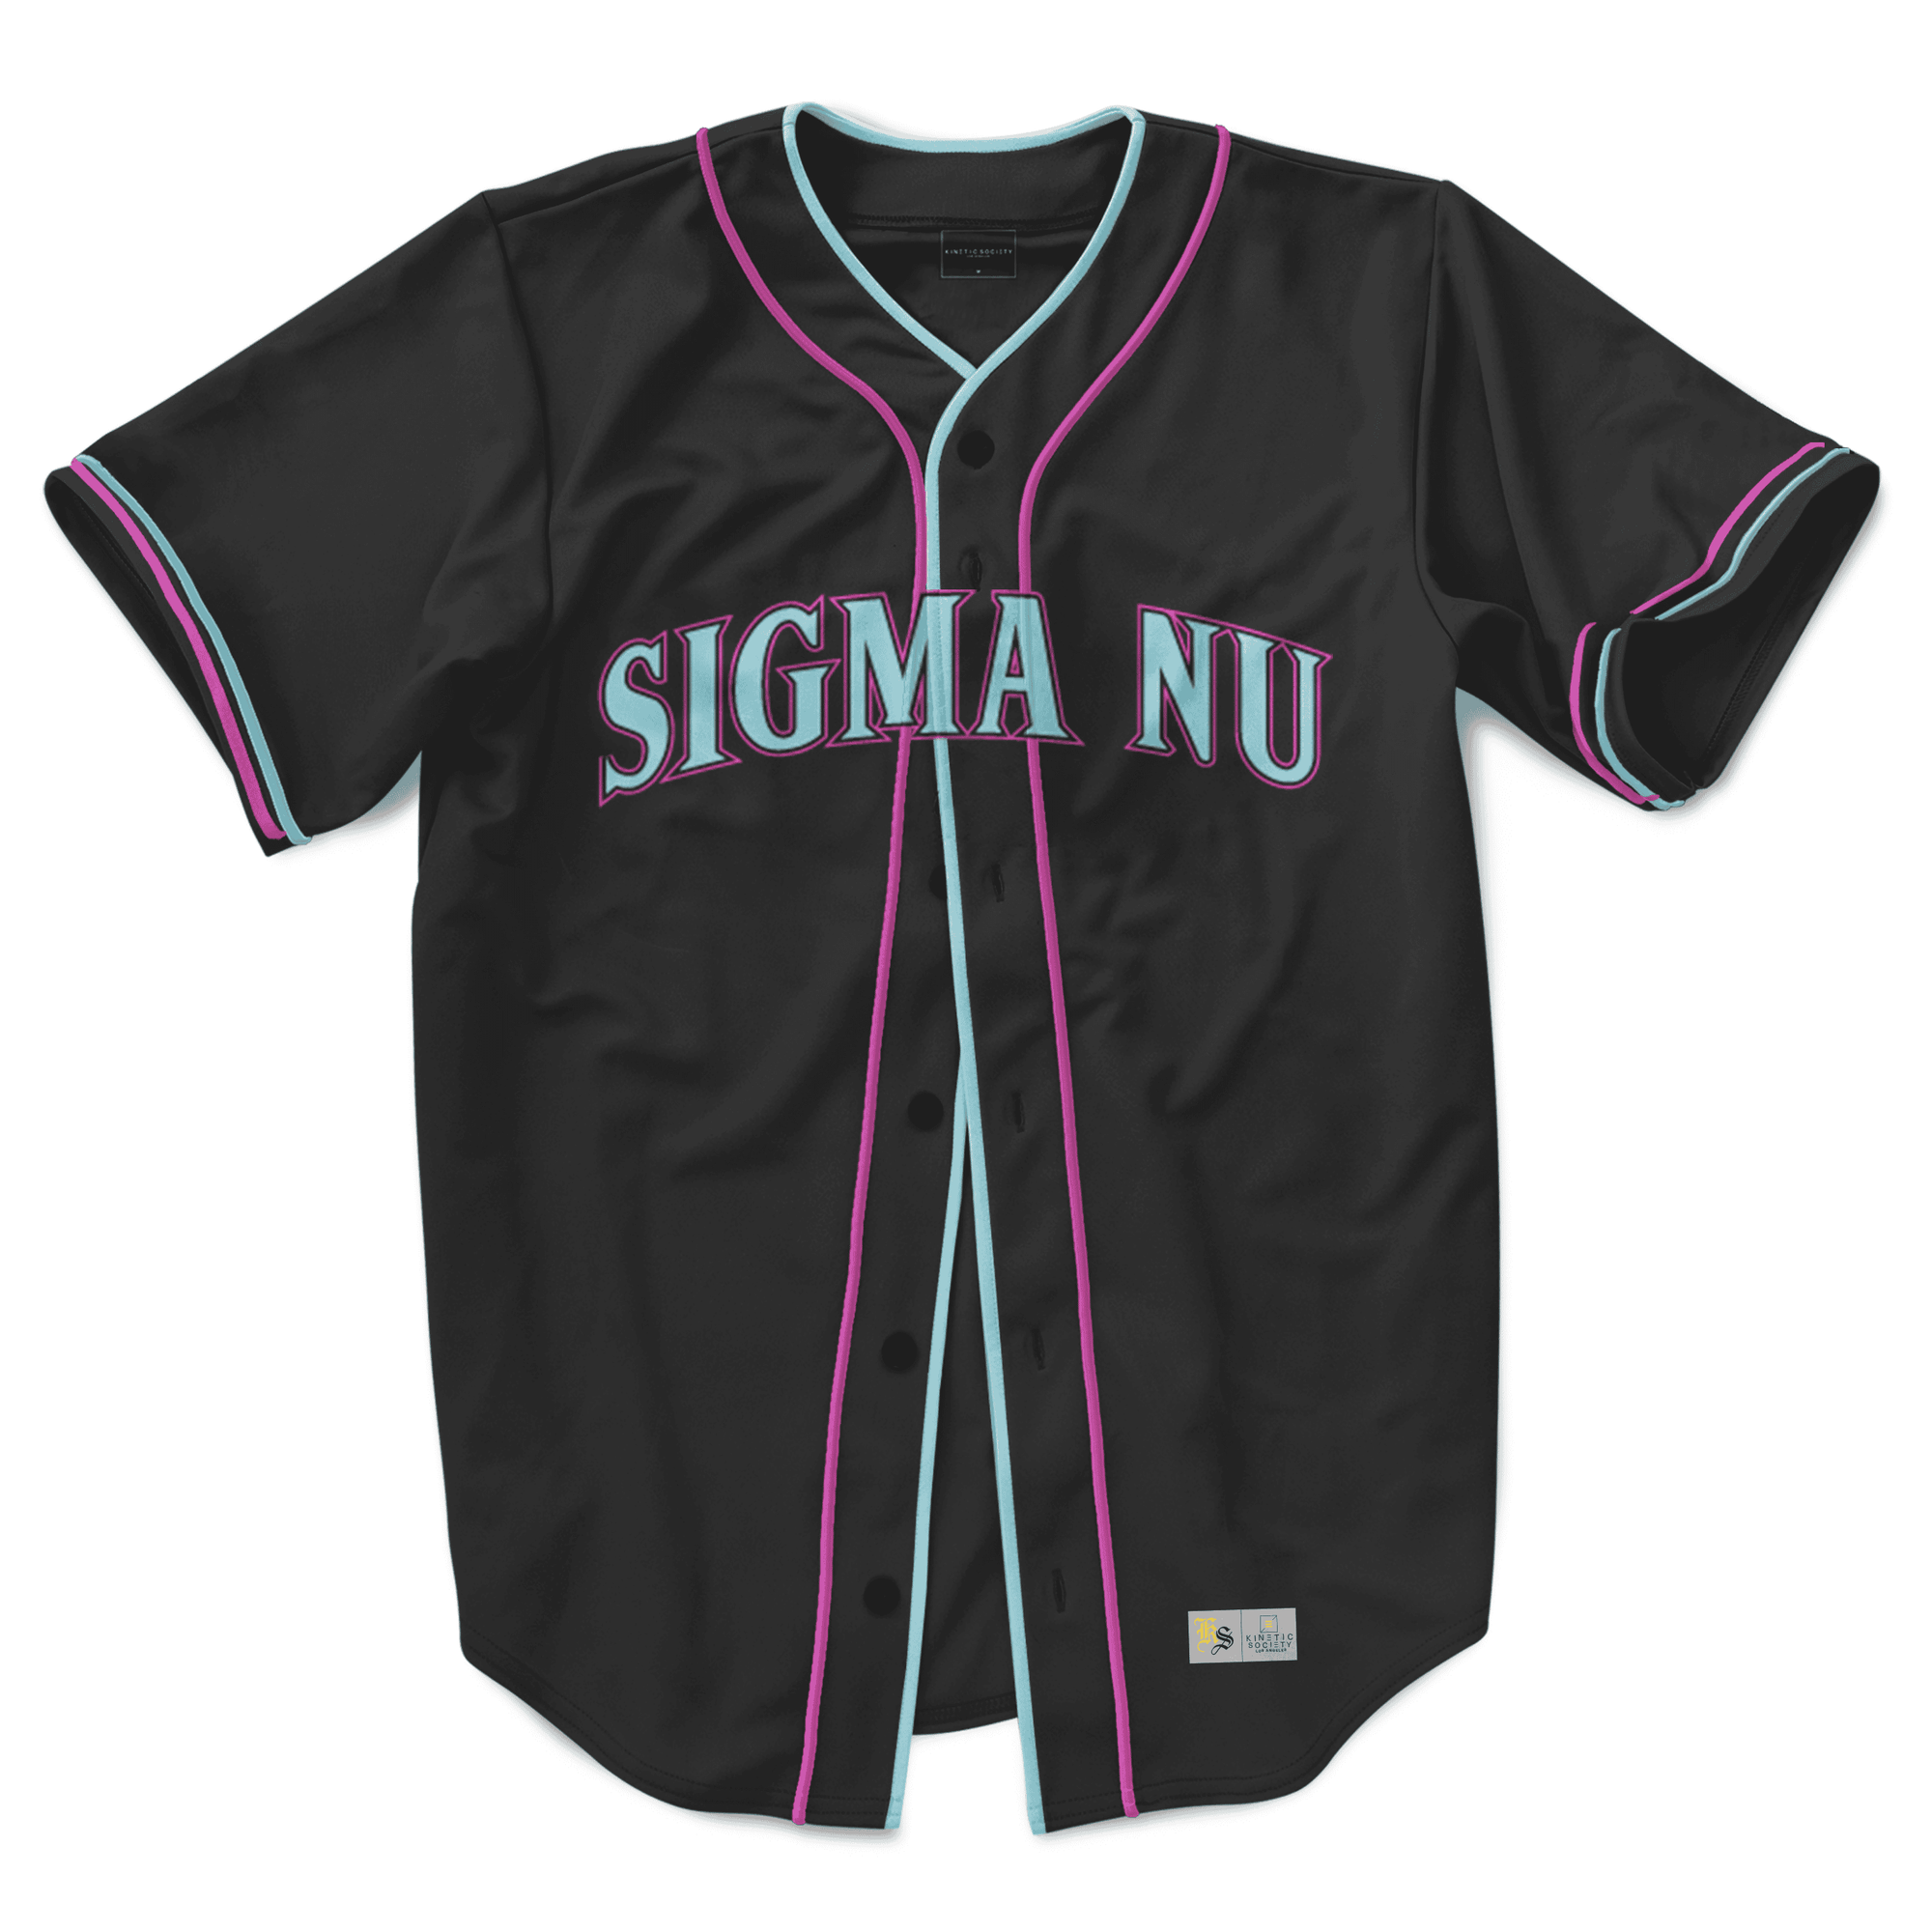 Sigma Nu - Neo Nightlife Baseball Jersey